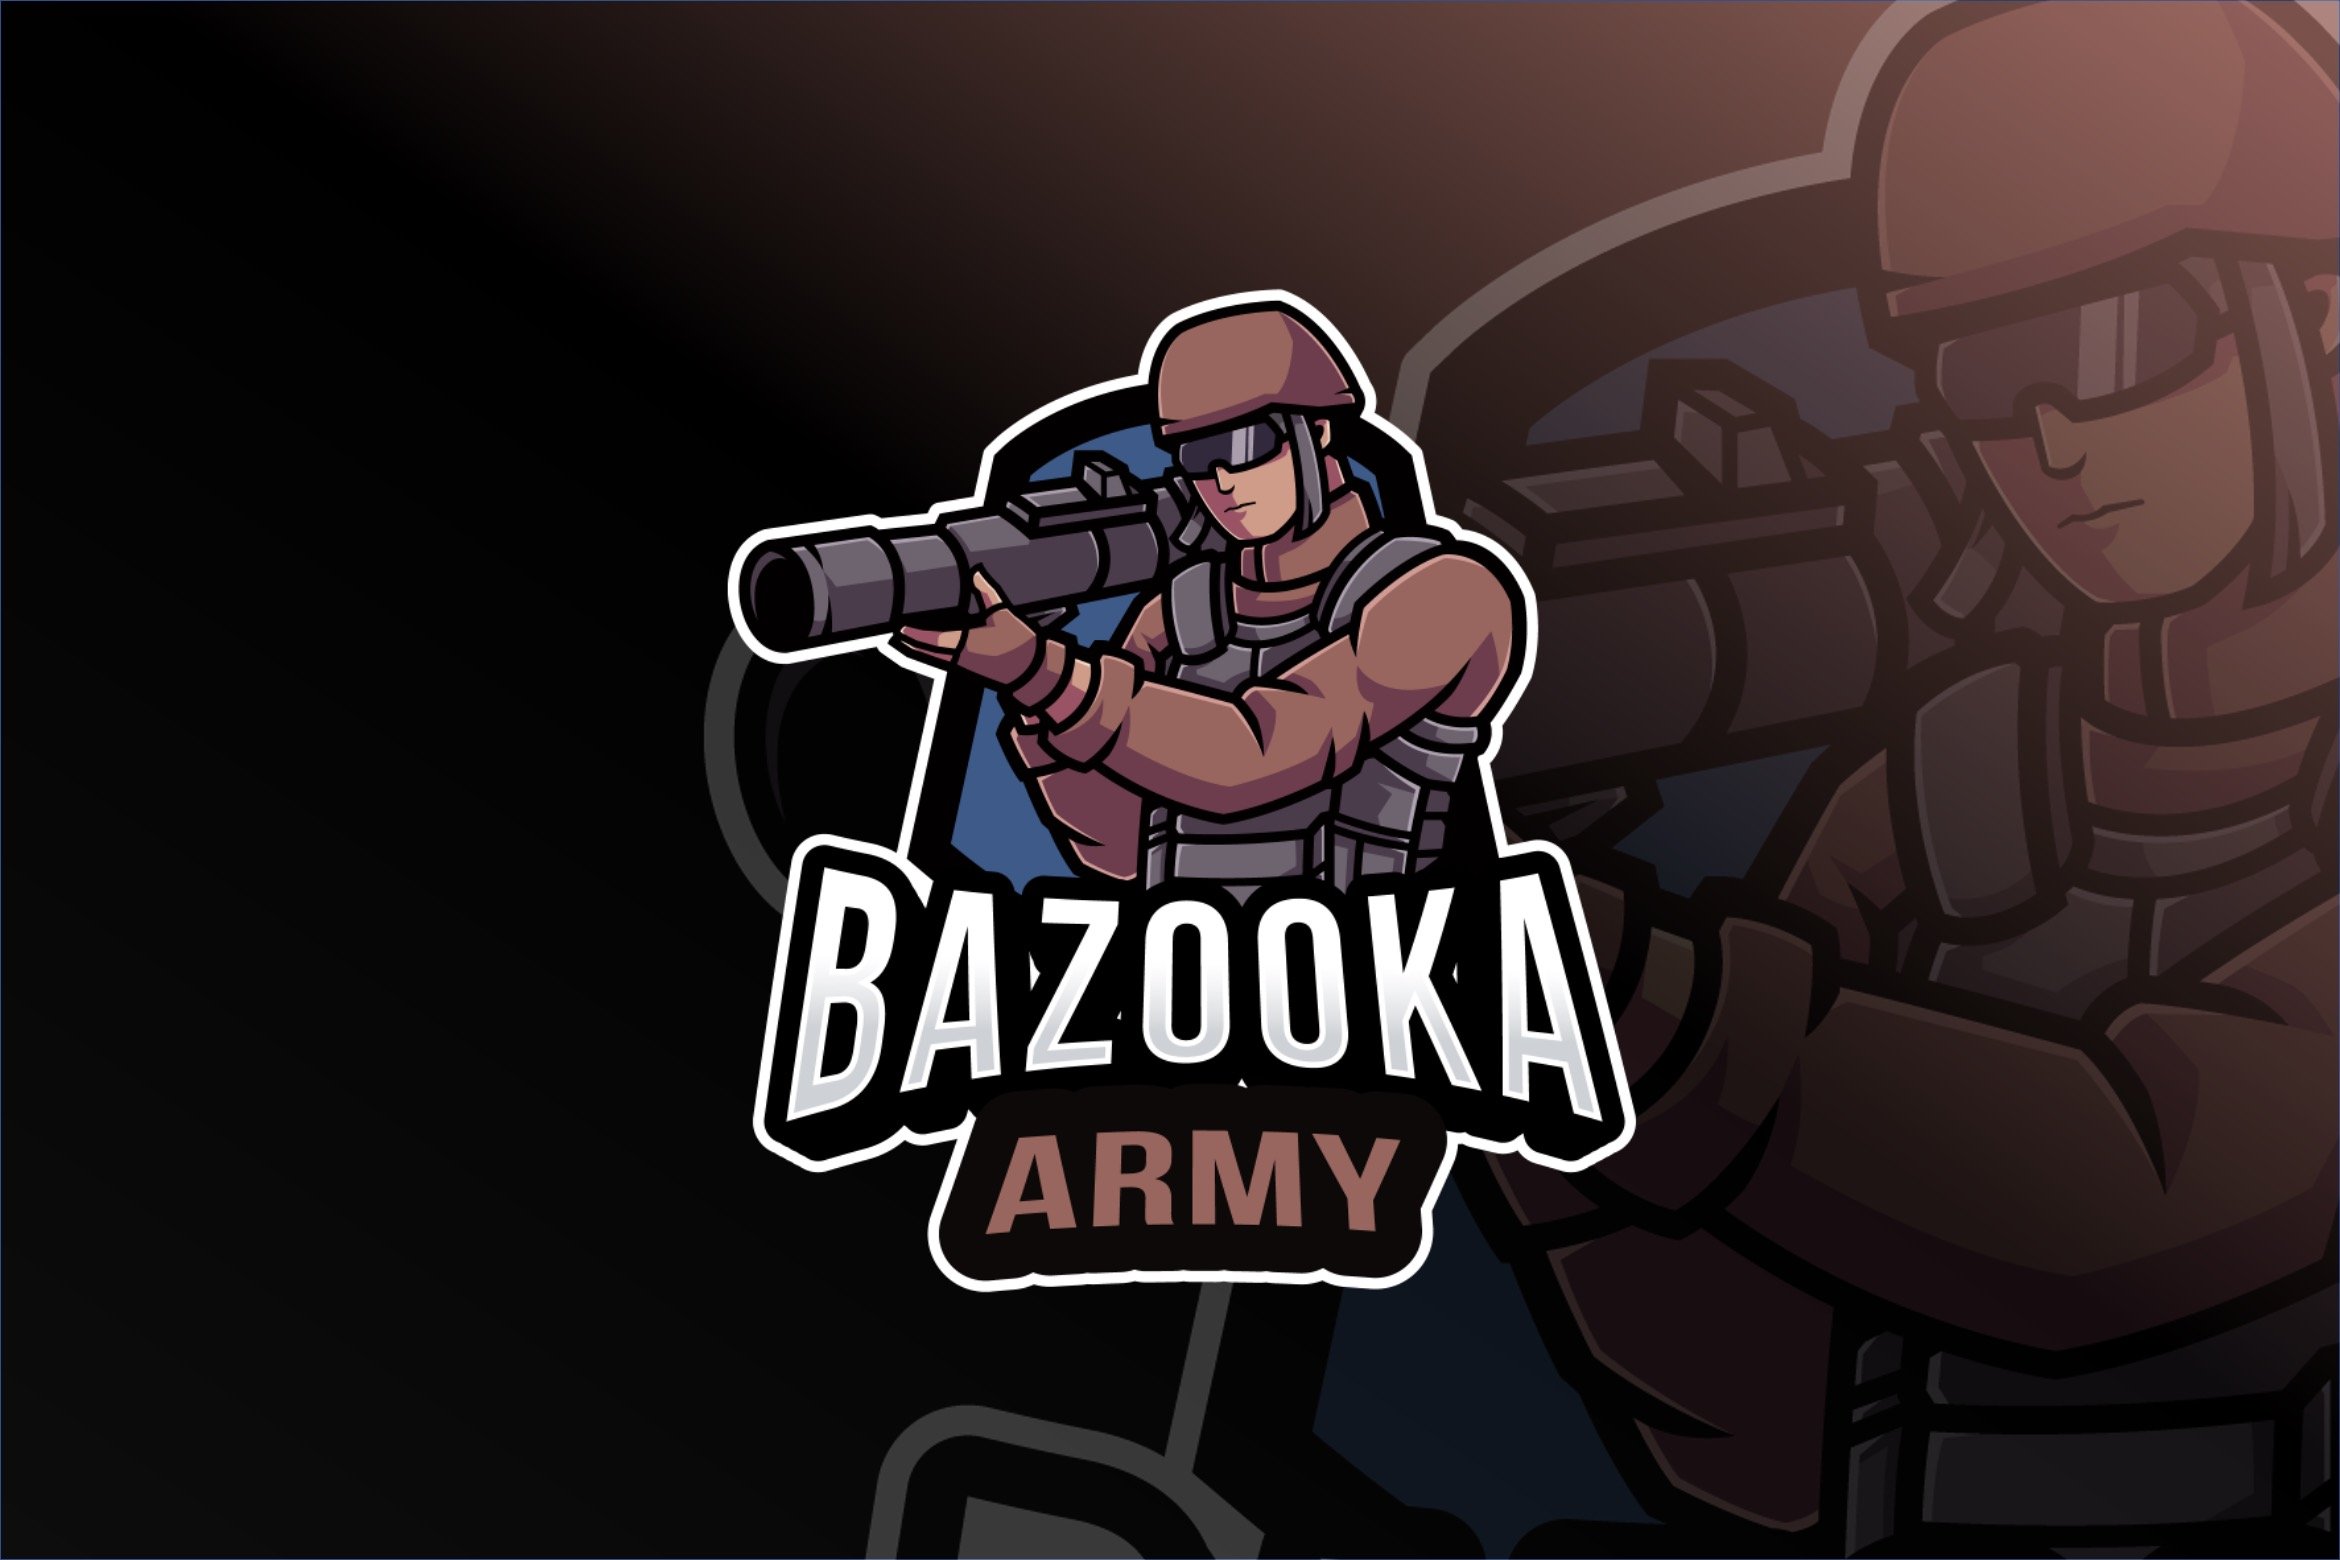 Bazooka Army Logo Template cover image.